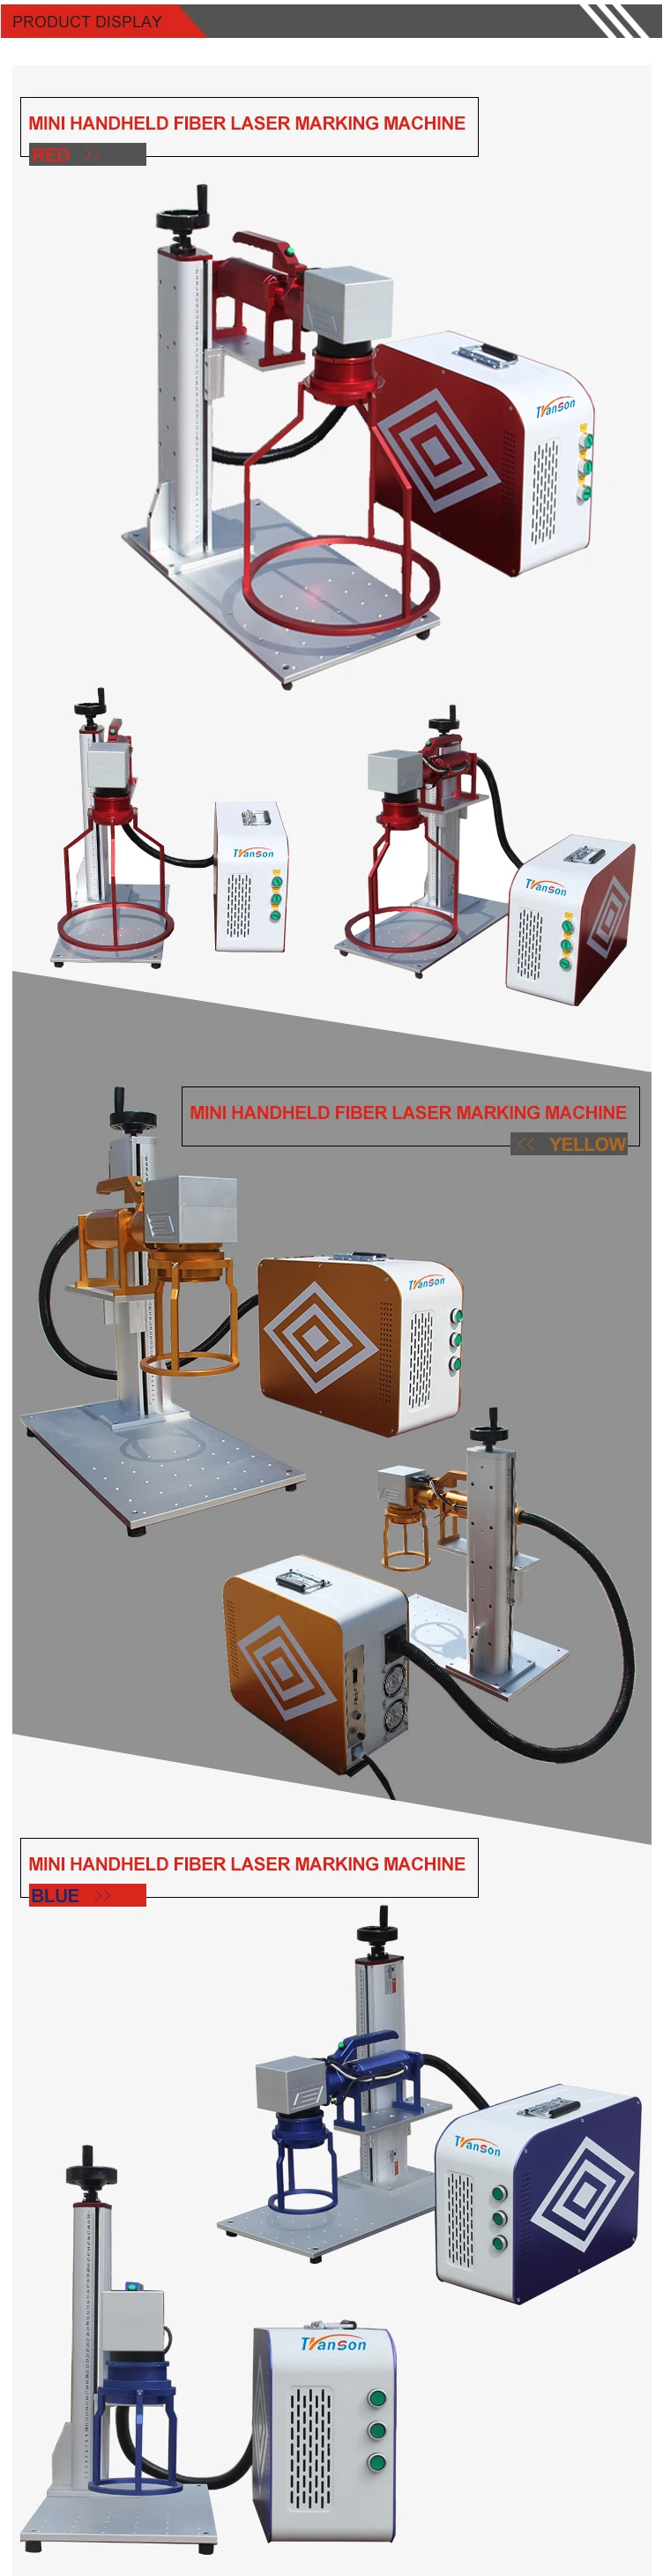 Hot sale handle 30W Raycus cnc jewelry/ auto parts/accessories fiber laser marking machine